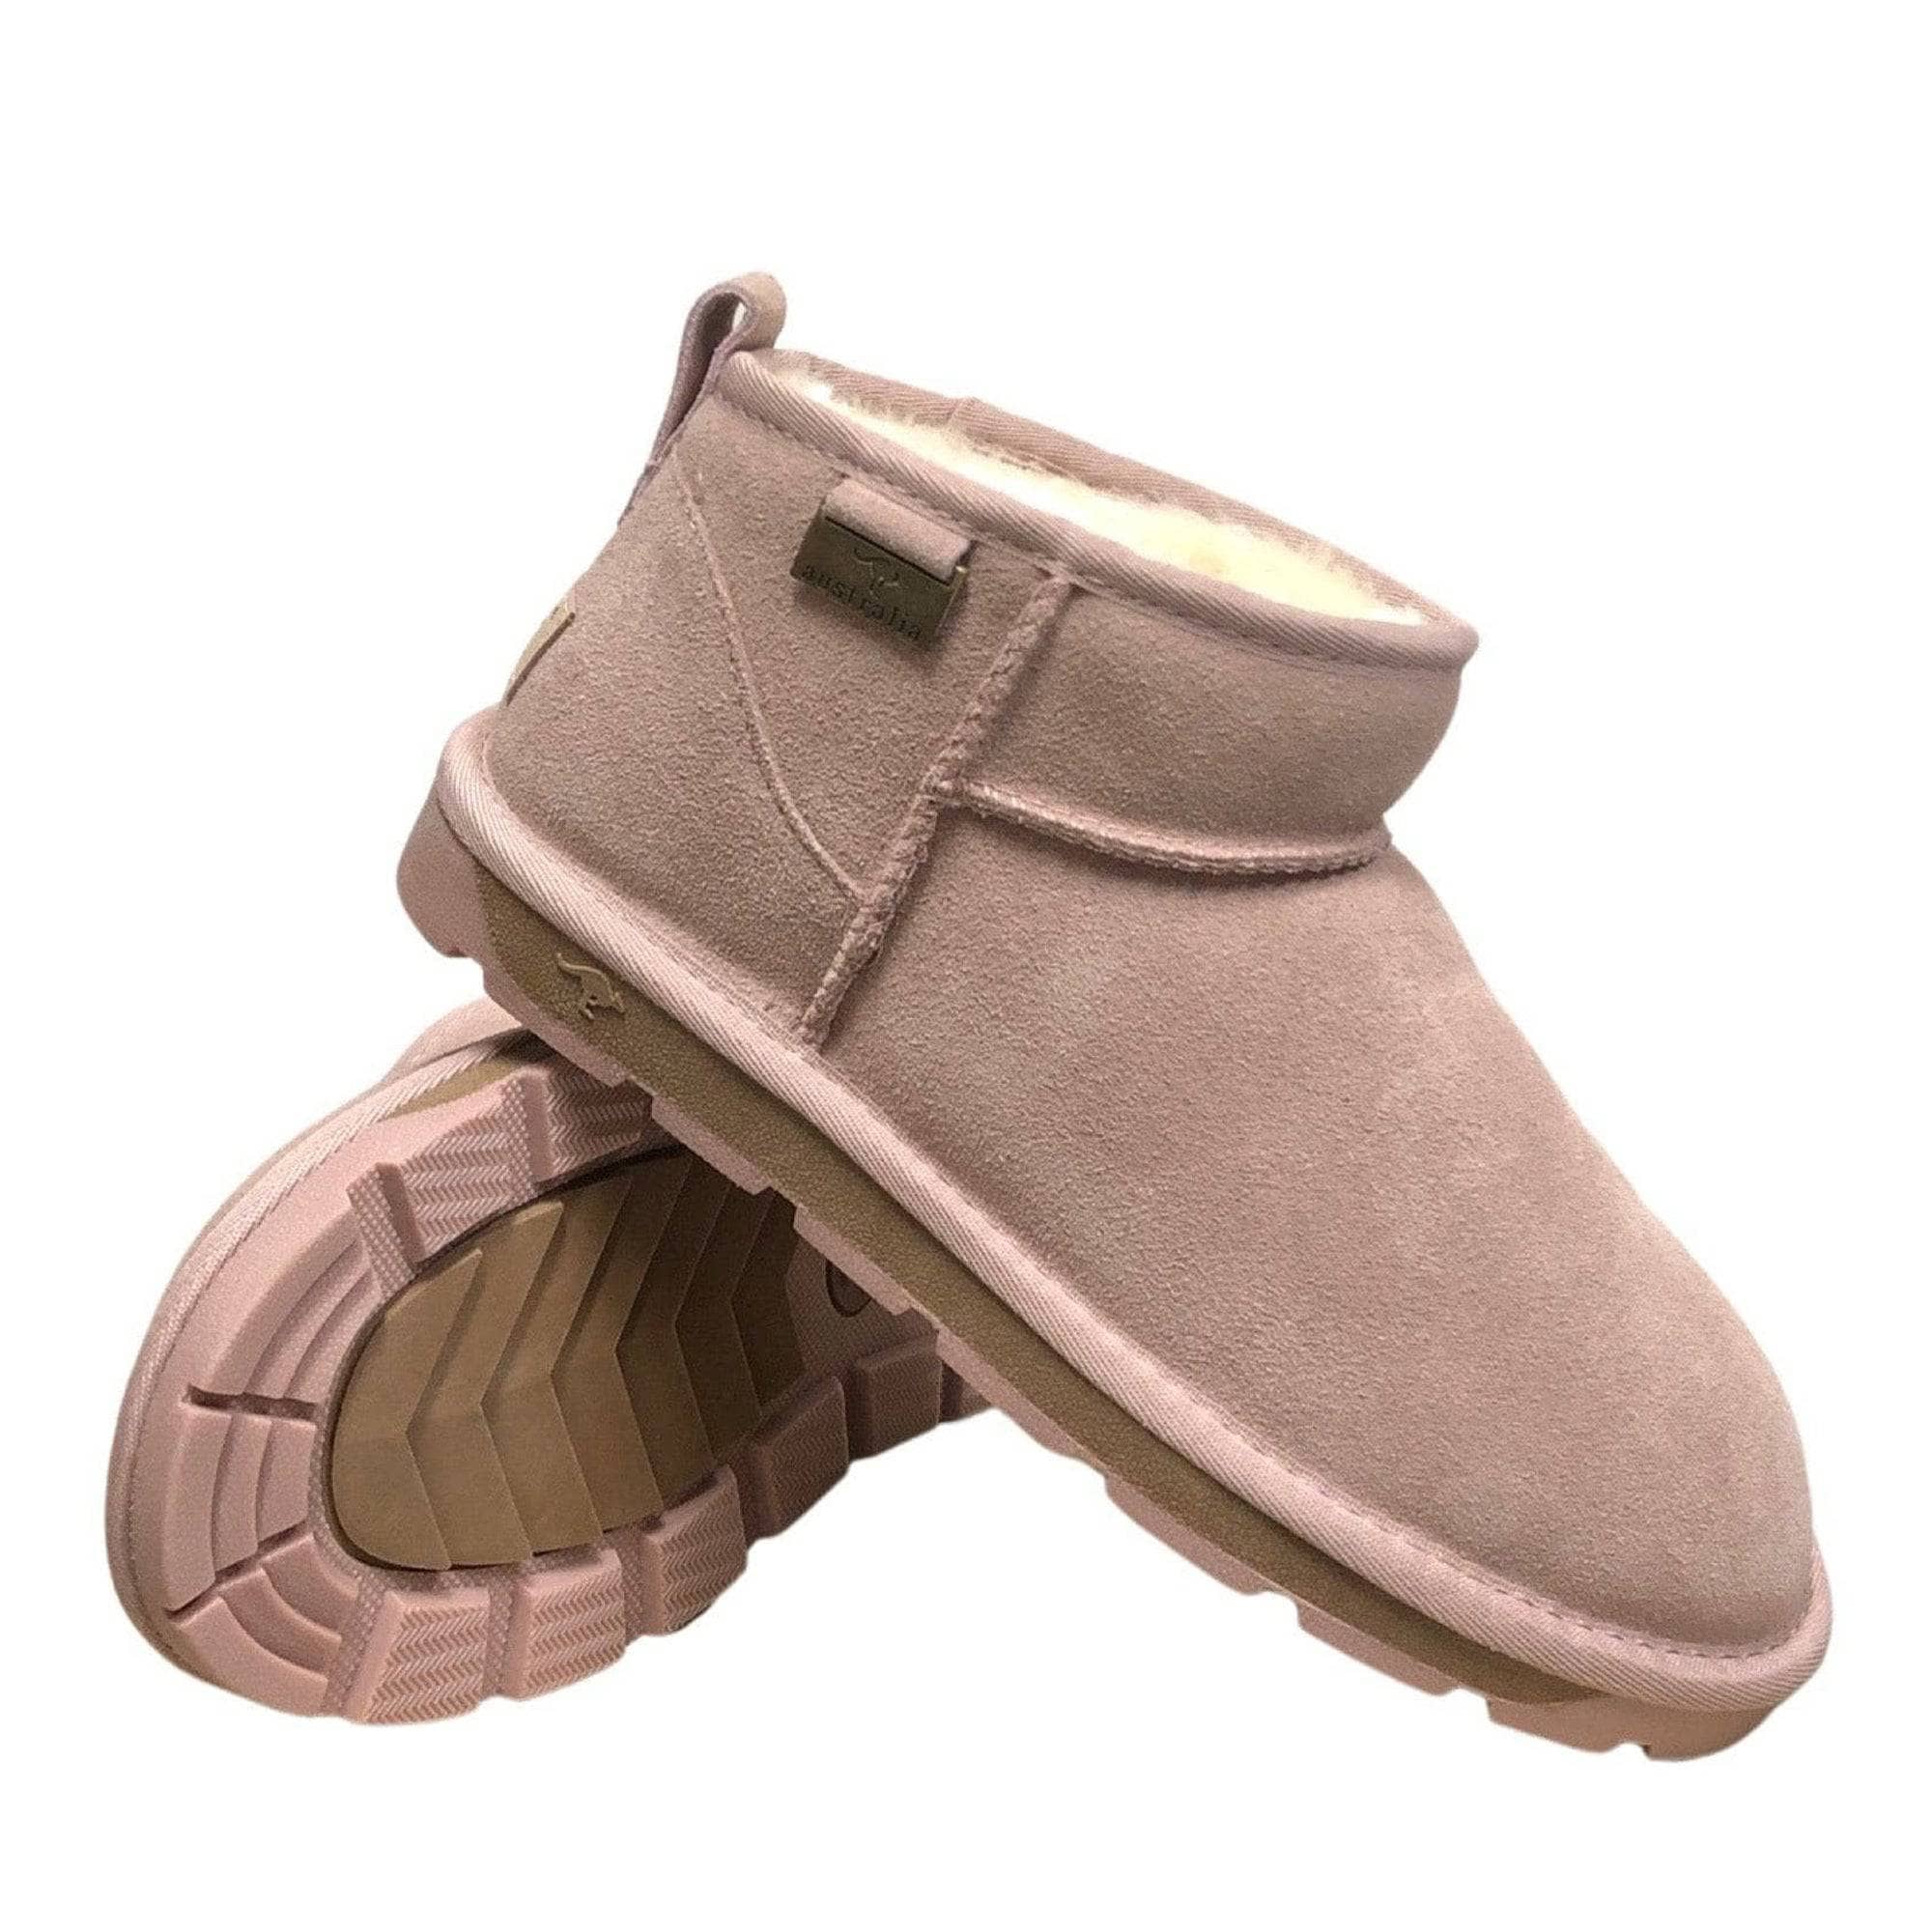 UGG Nano Sheepskin Boots